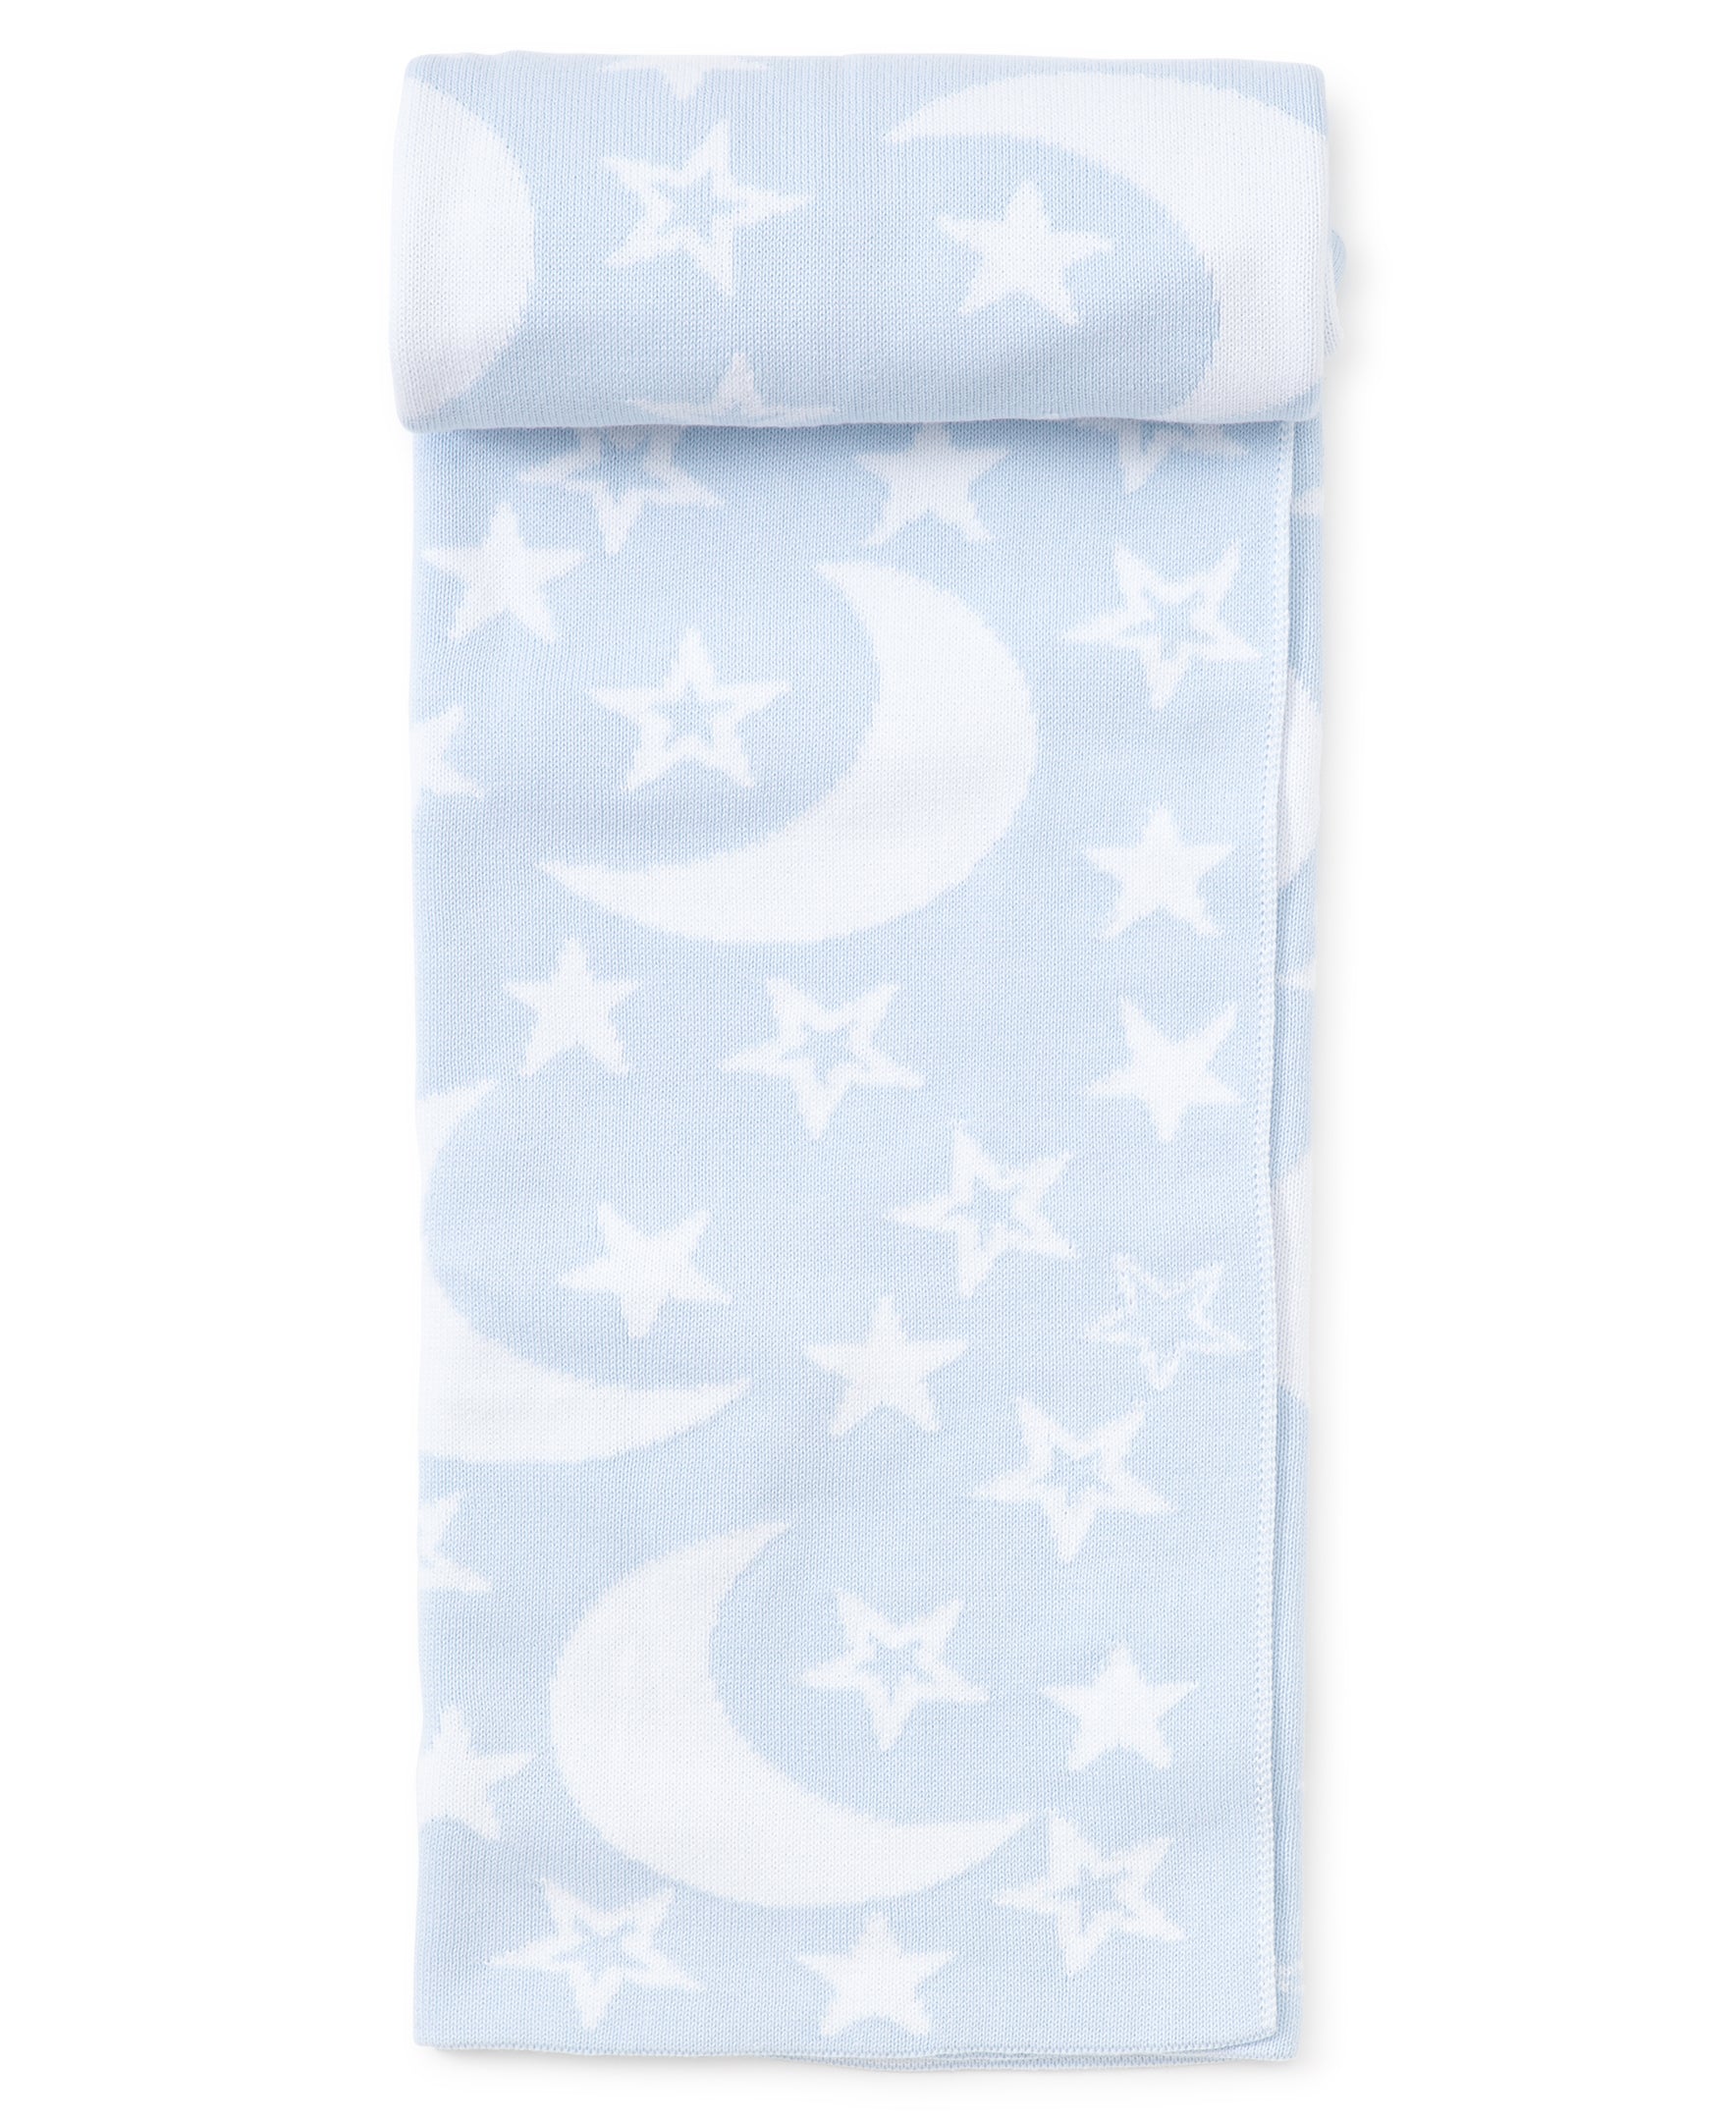 Blue Moon and Star Knit Novelty Blanket - Kissy Kissy